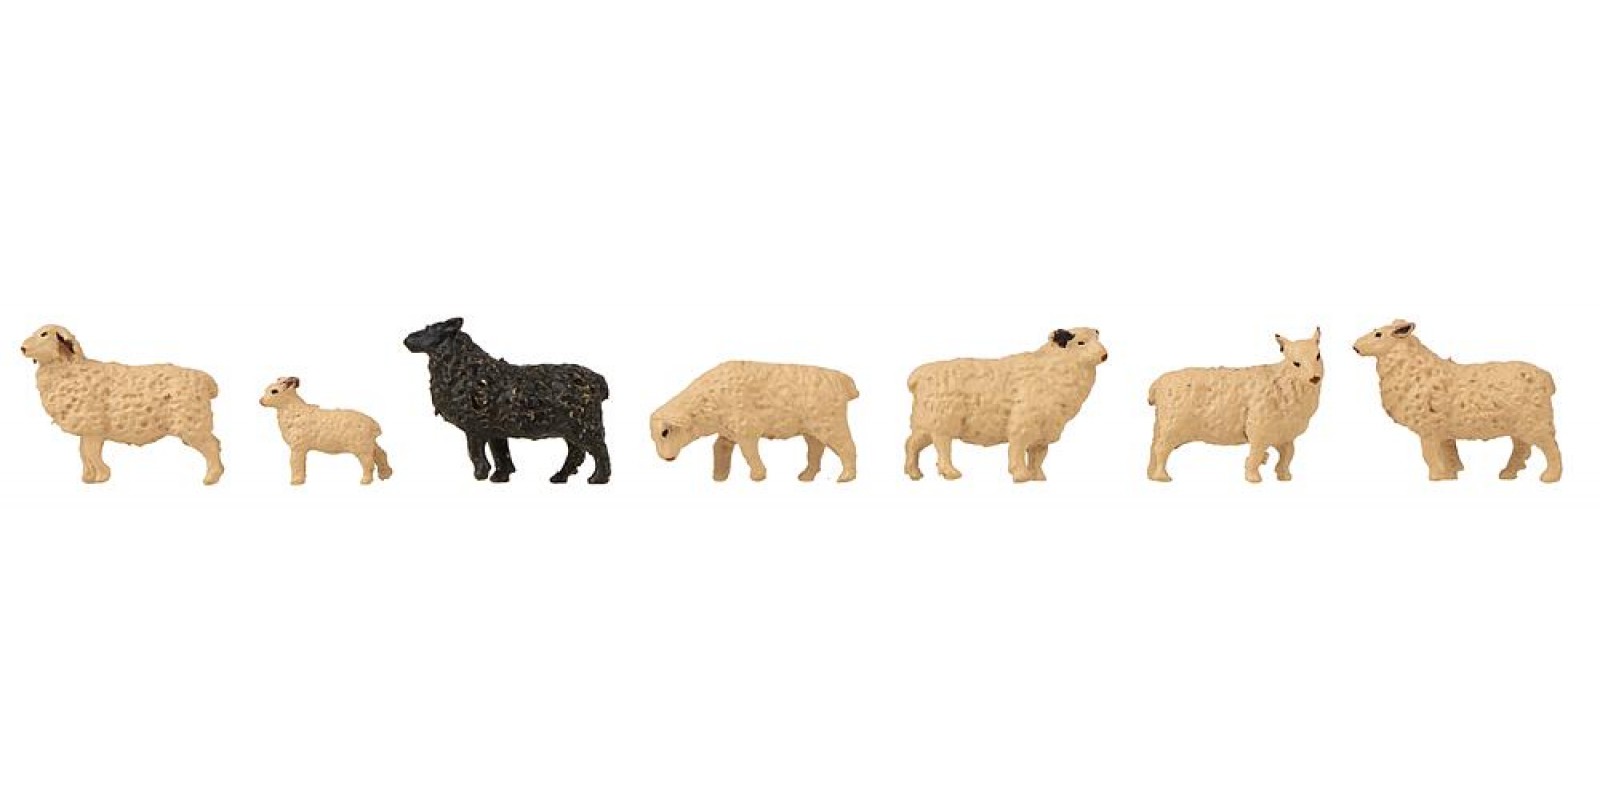 FA180236 Sheep Figurine set with mini sound effect